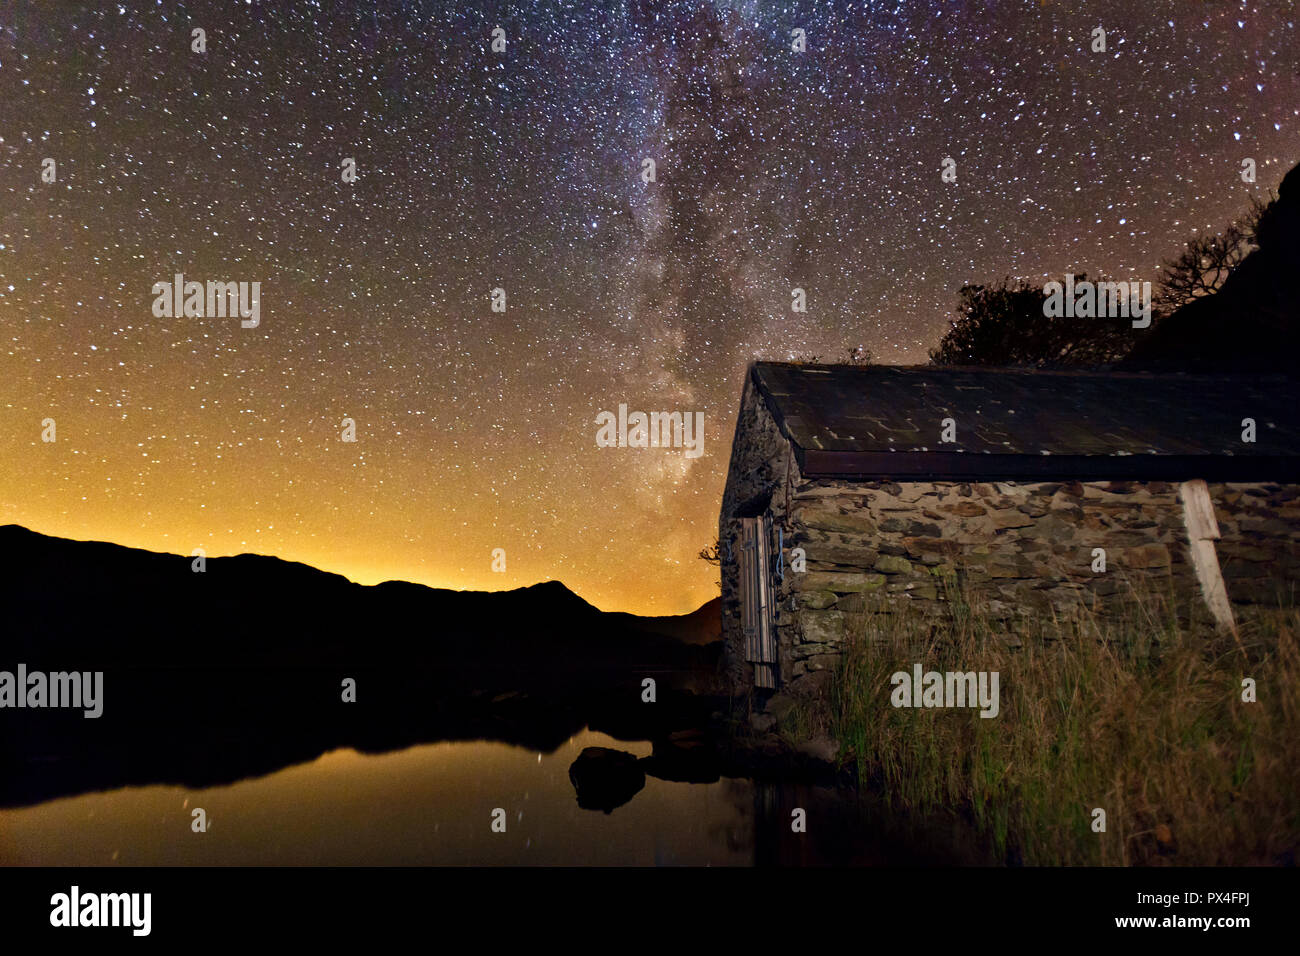 Astro-photography, or night photos. Stars at night Stock Photo